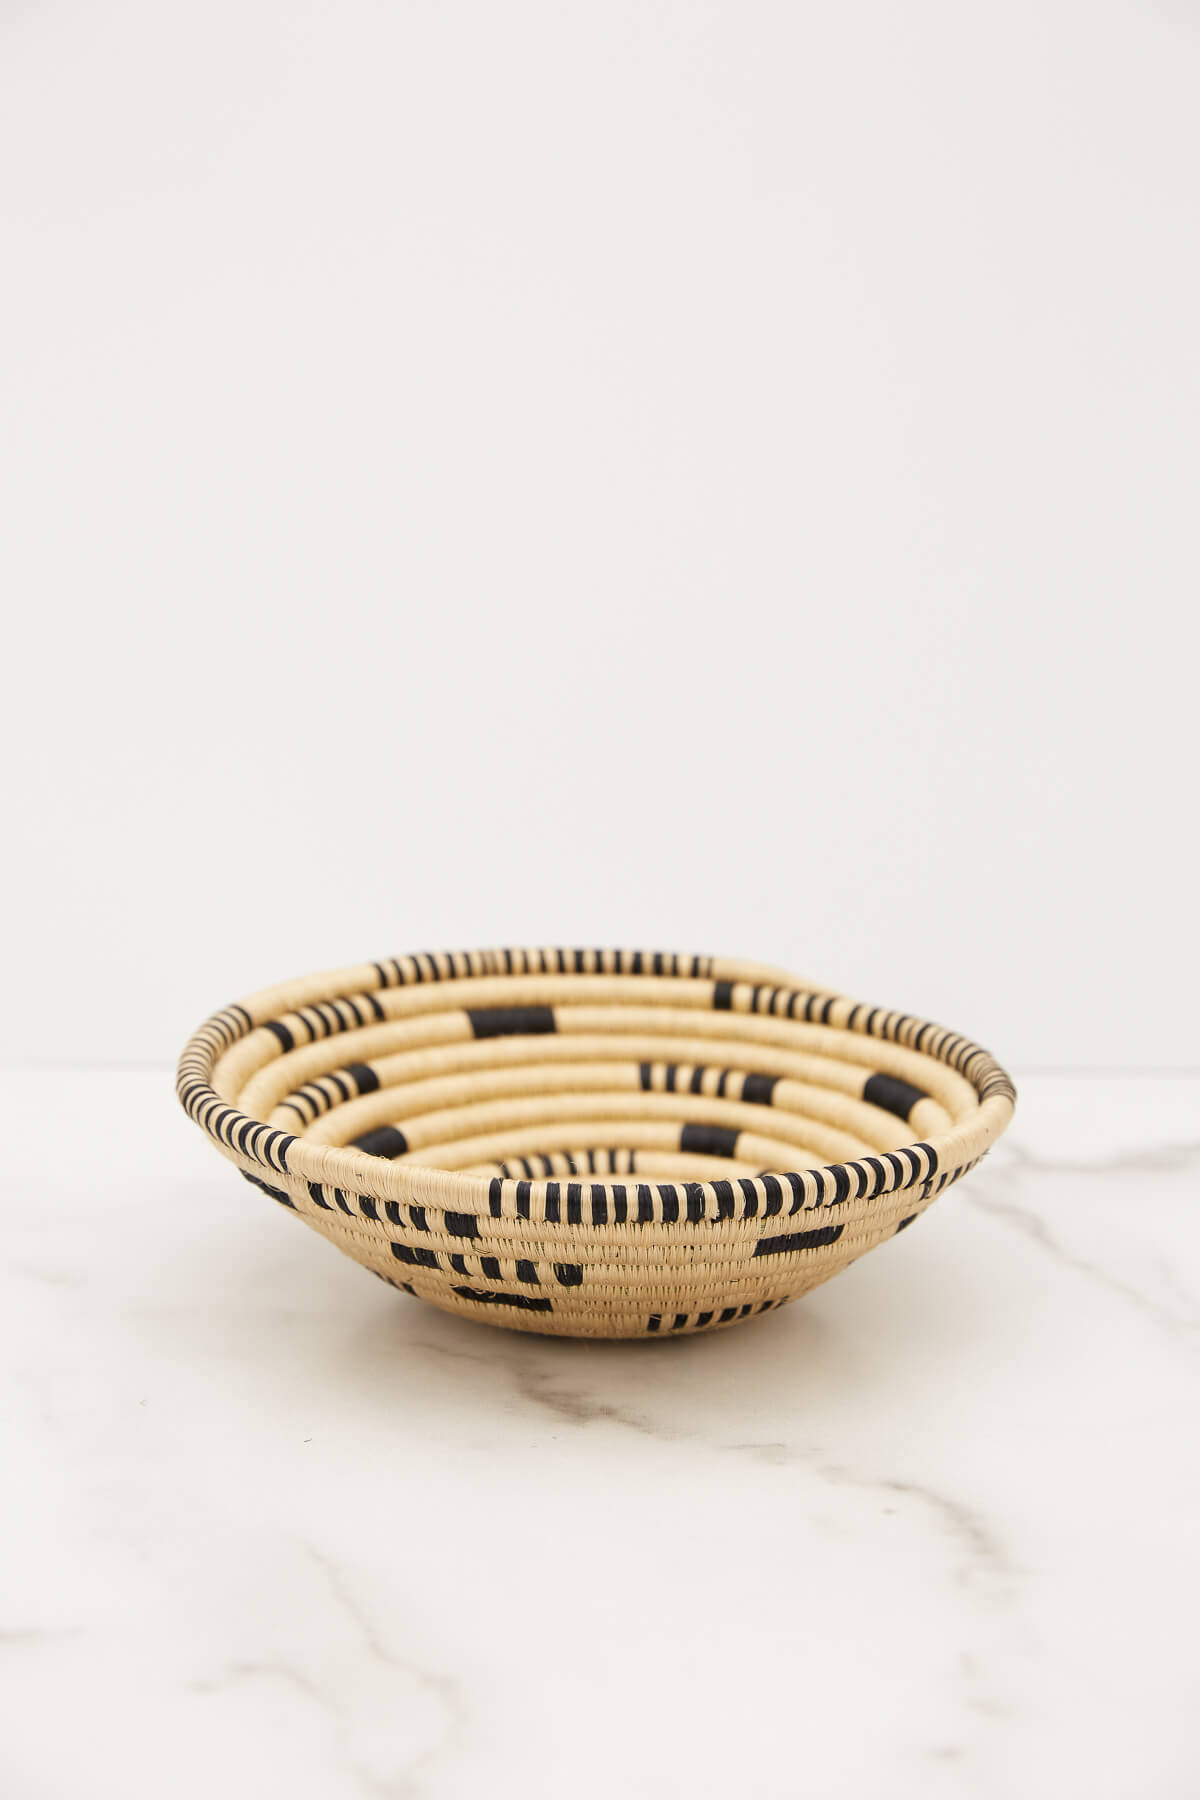 MAKAUA Small Round Basket - Palm and Perkins